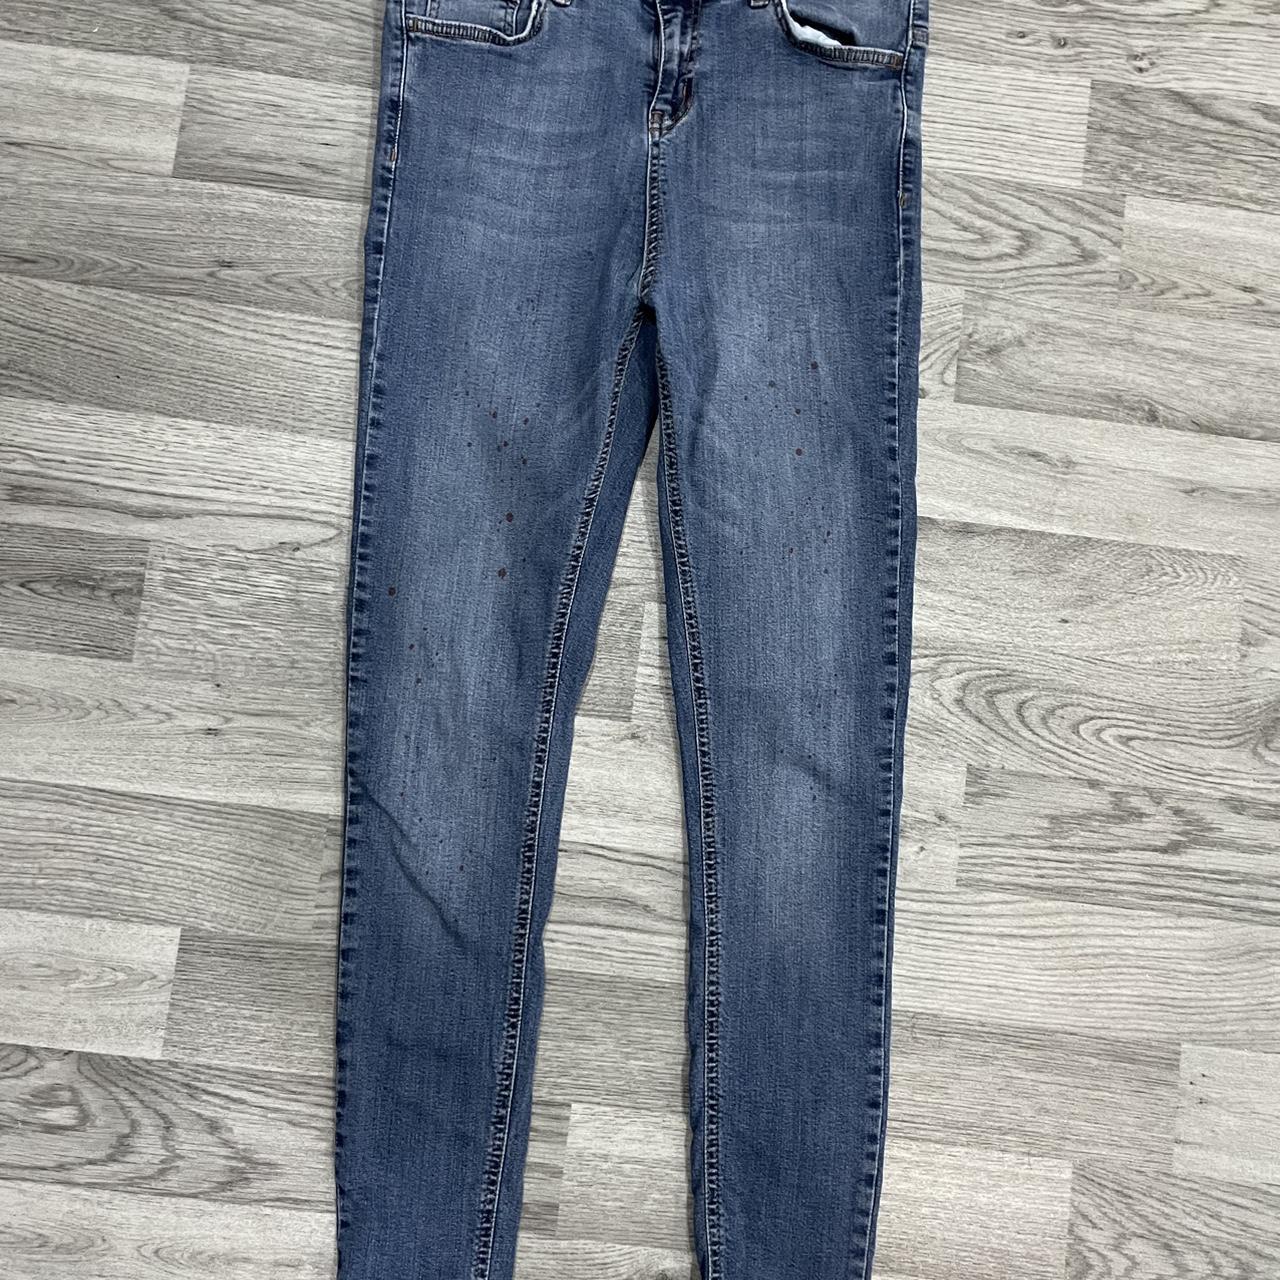 Hera London Paint Splat Jeans Size 30 R Good condition - Depop